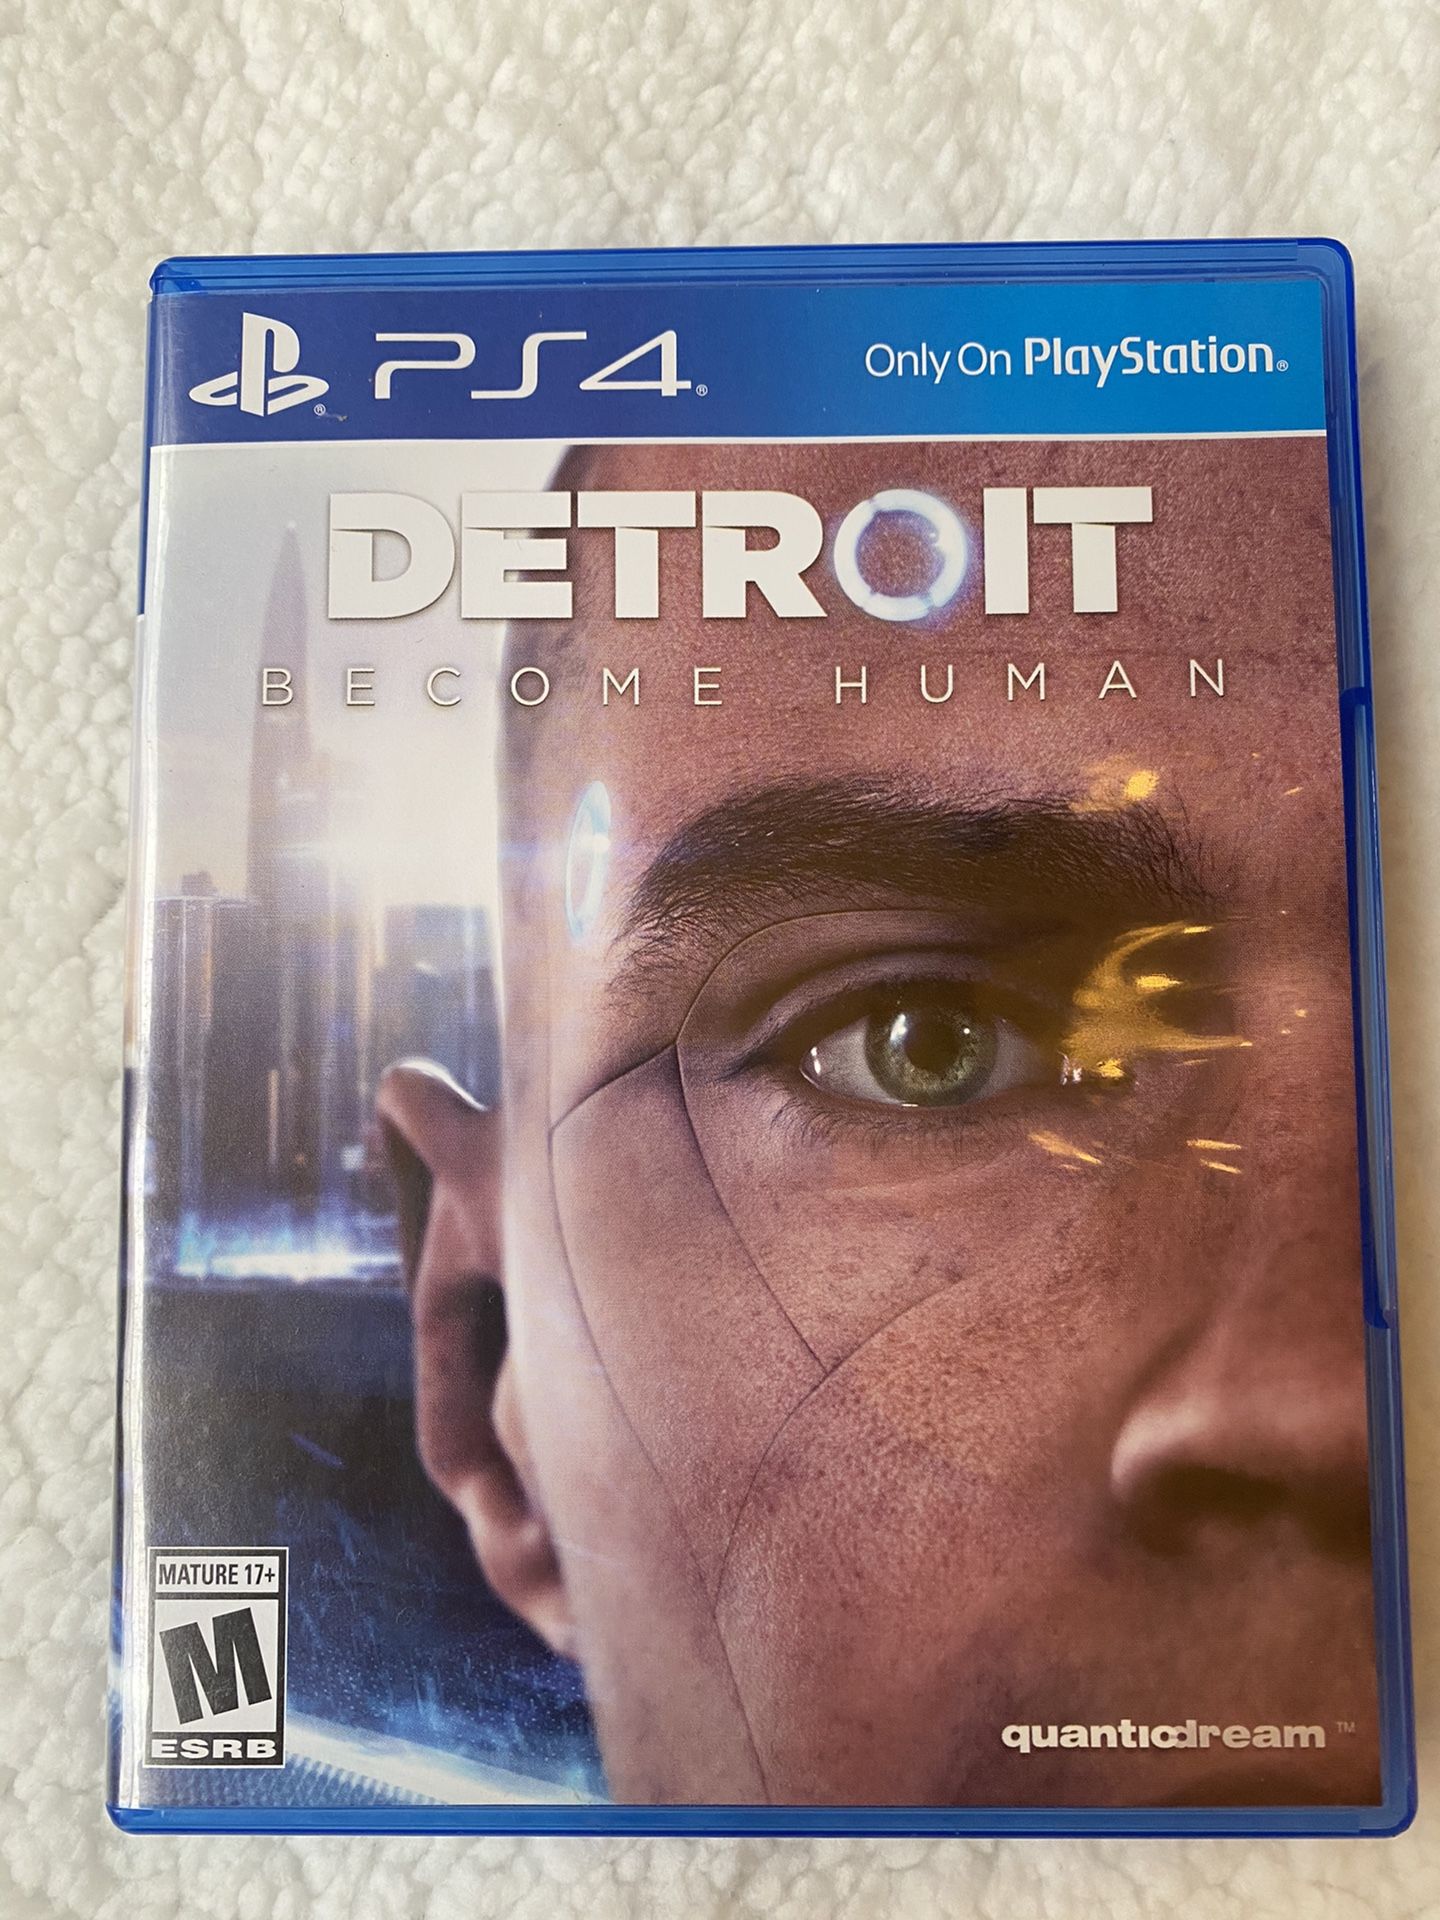 Detroit is Human PS4